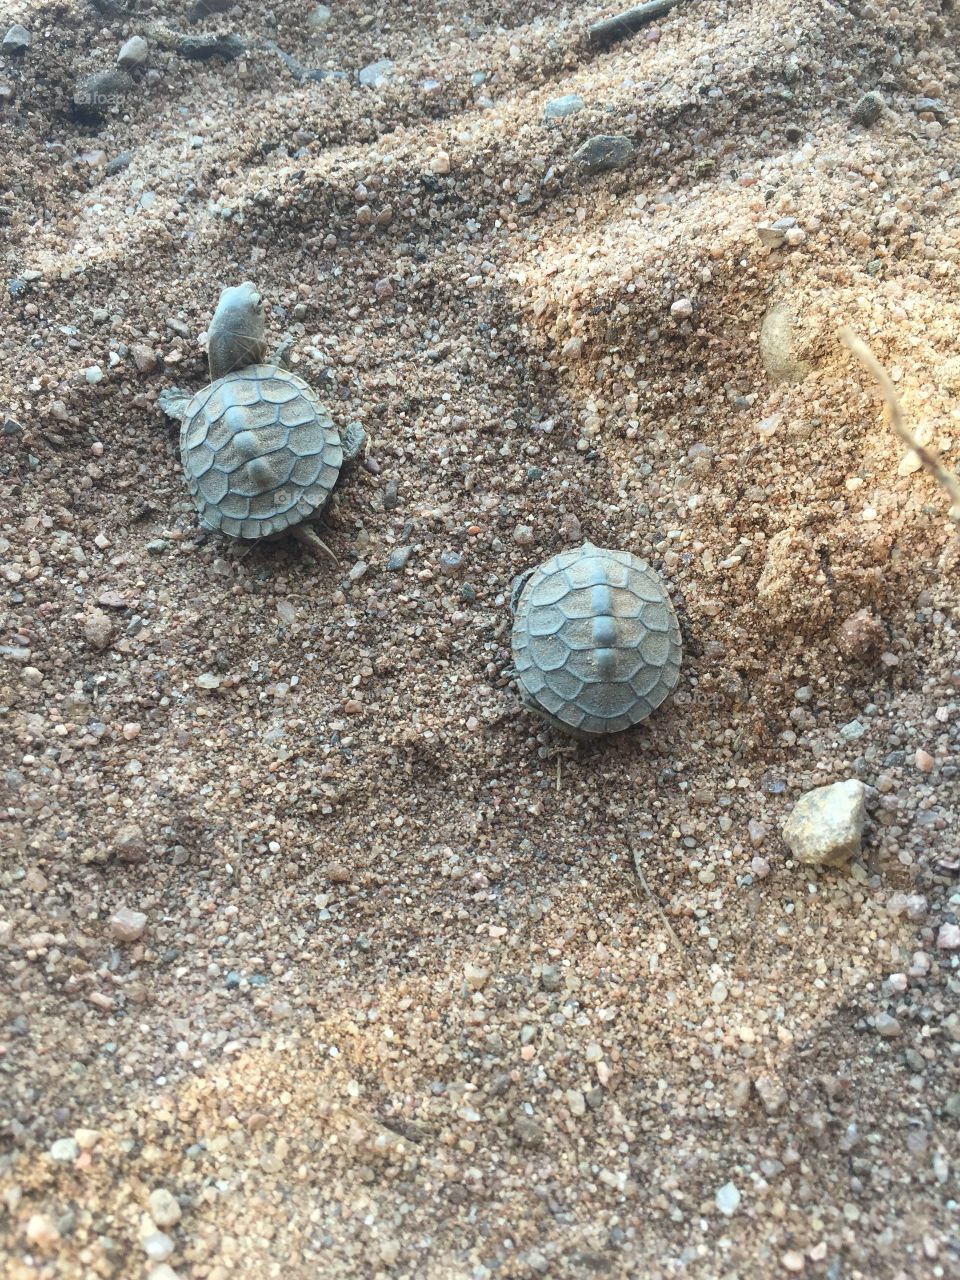 Baby turtles 🐢